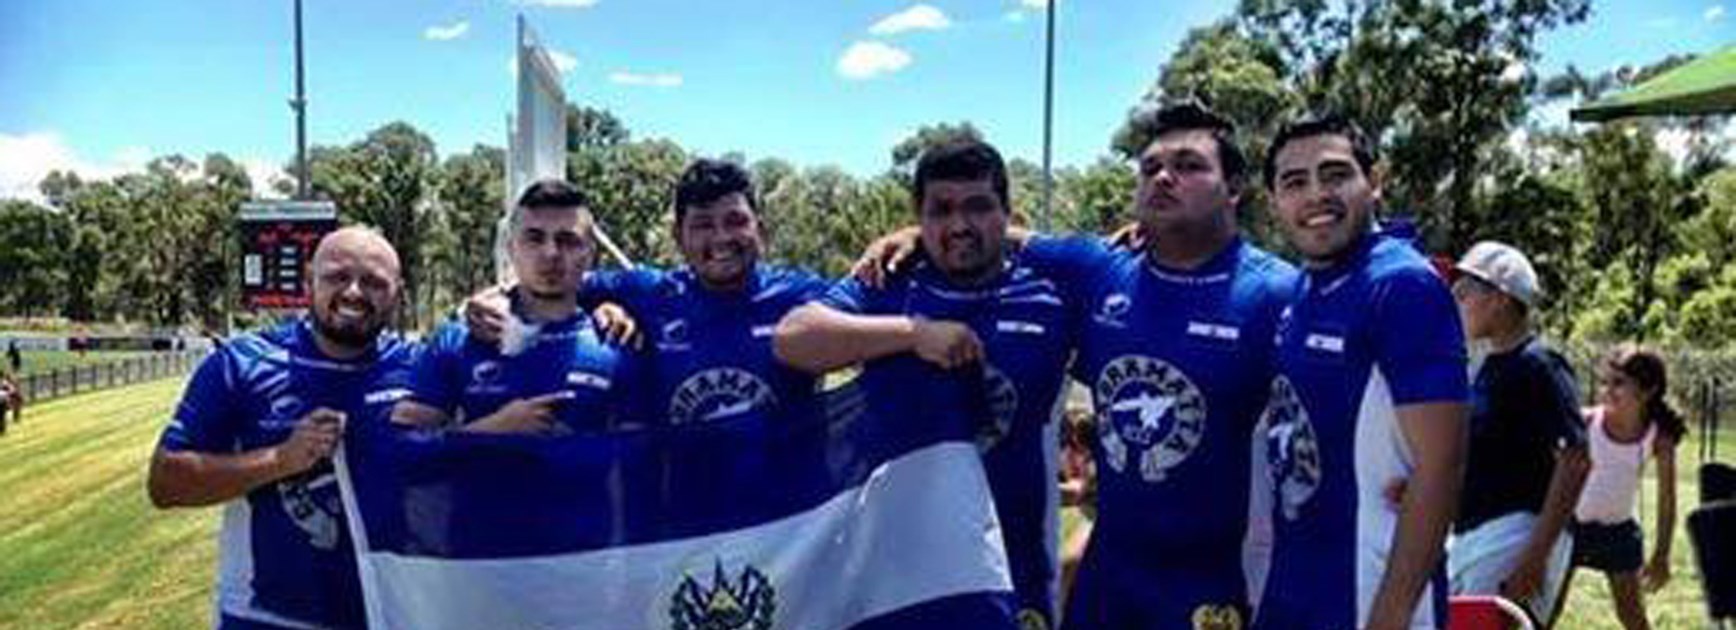 El Salvador players at the Cabramatta Nines earlier this year.